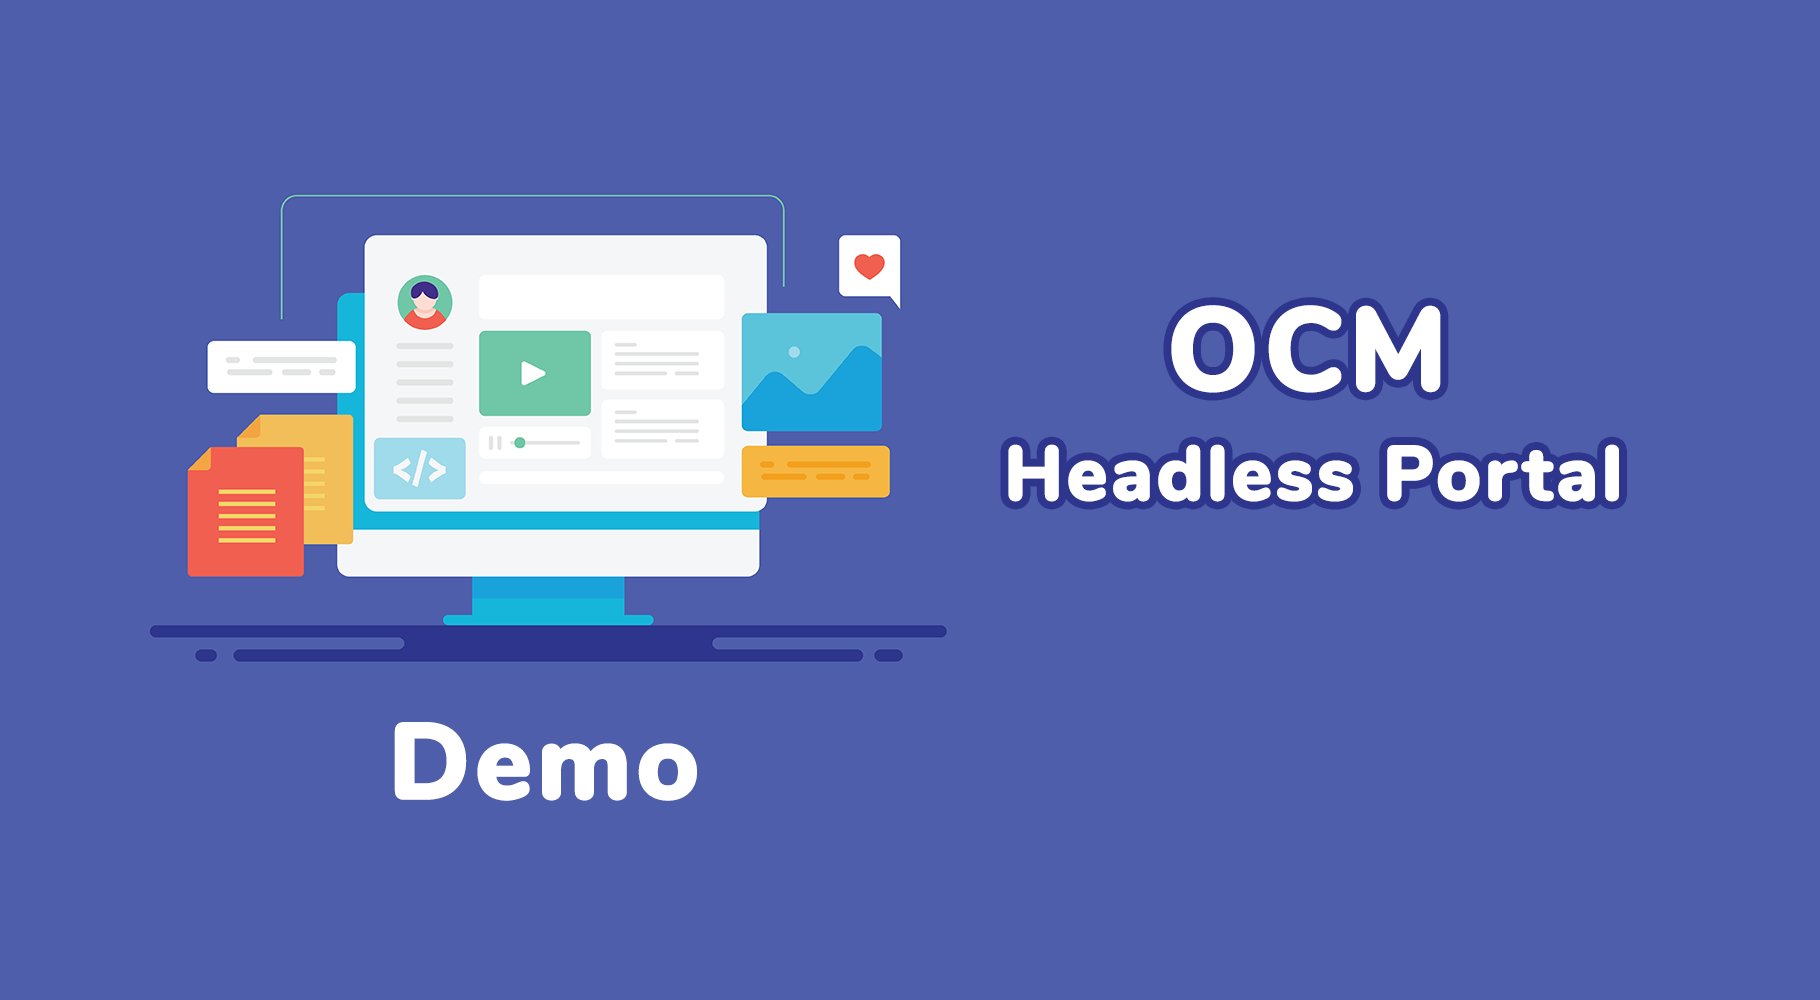 OCM Headless Portal Demo